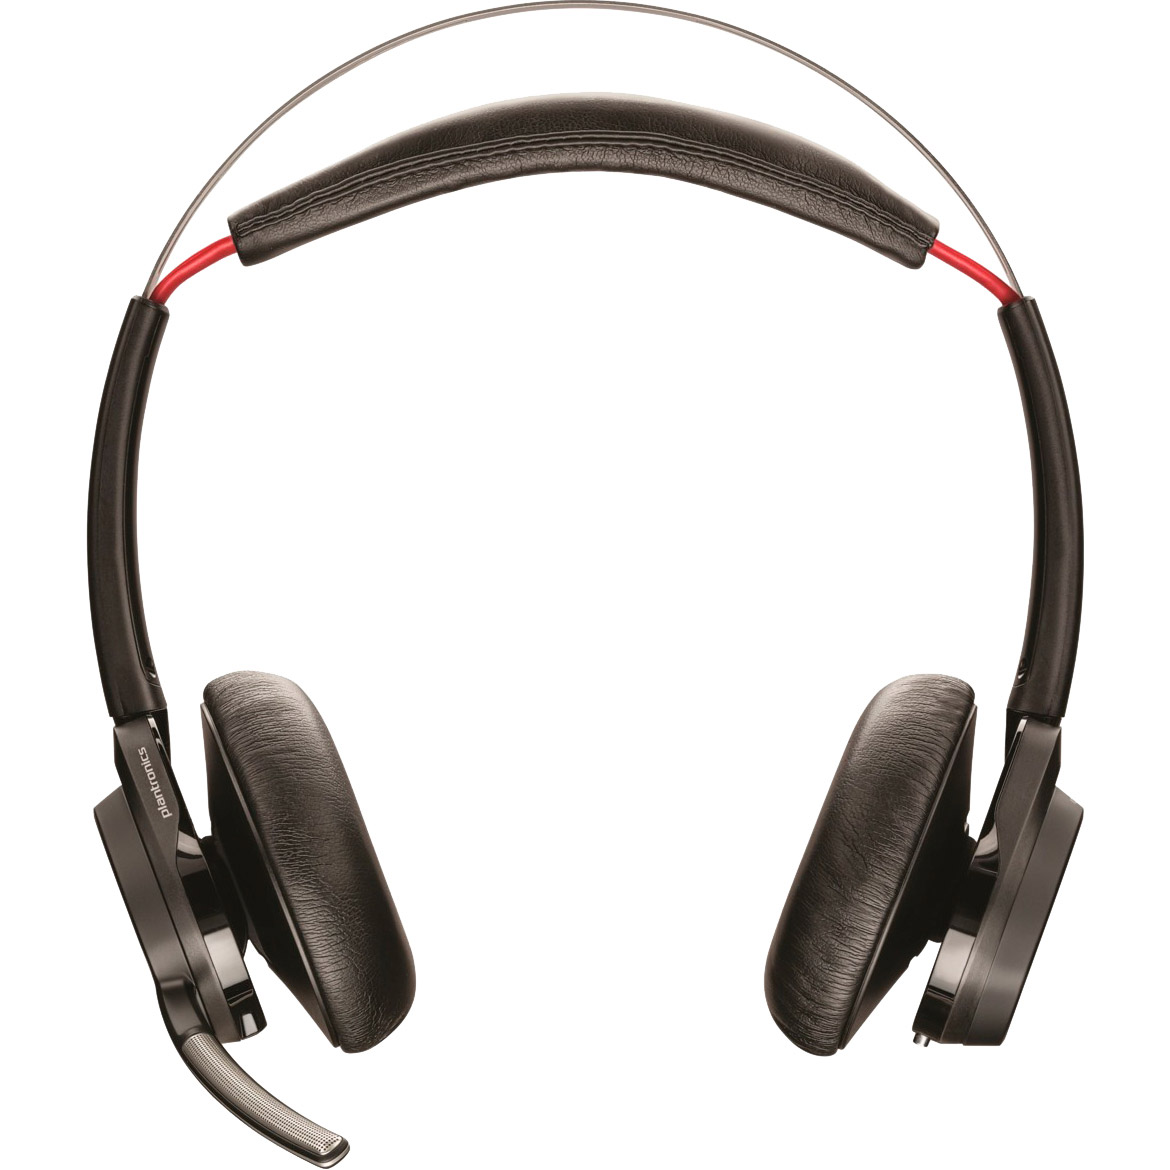 Bt headset. Plantronics Voyager Focus UC b825-m. Plantronics bt600. Plantronics проводные Bluetooth наушники. Plantronics b825-m.